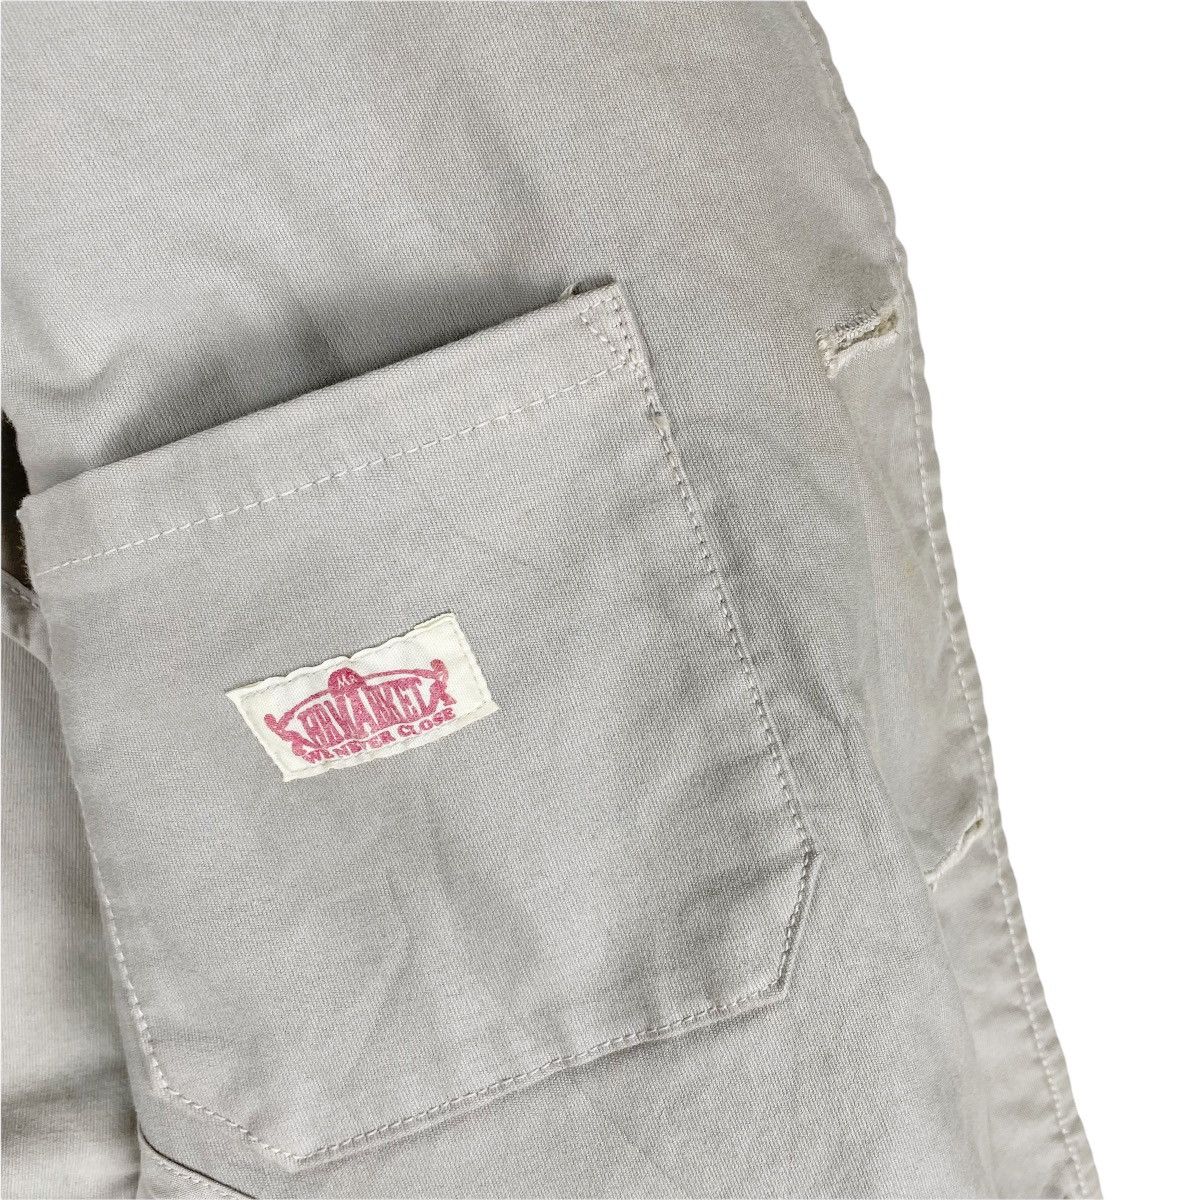 🔥HR Market Japan Workwear Jacket - 11